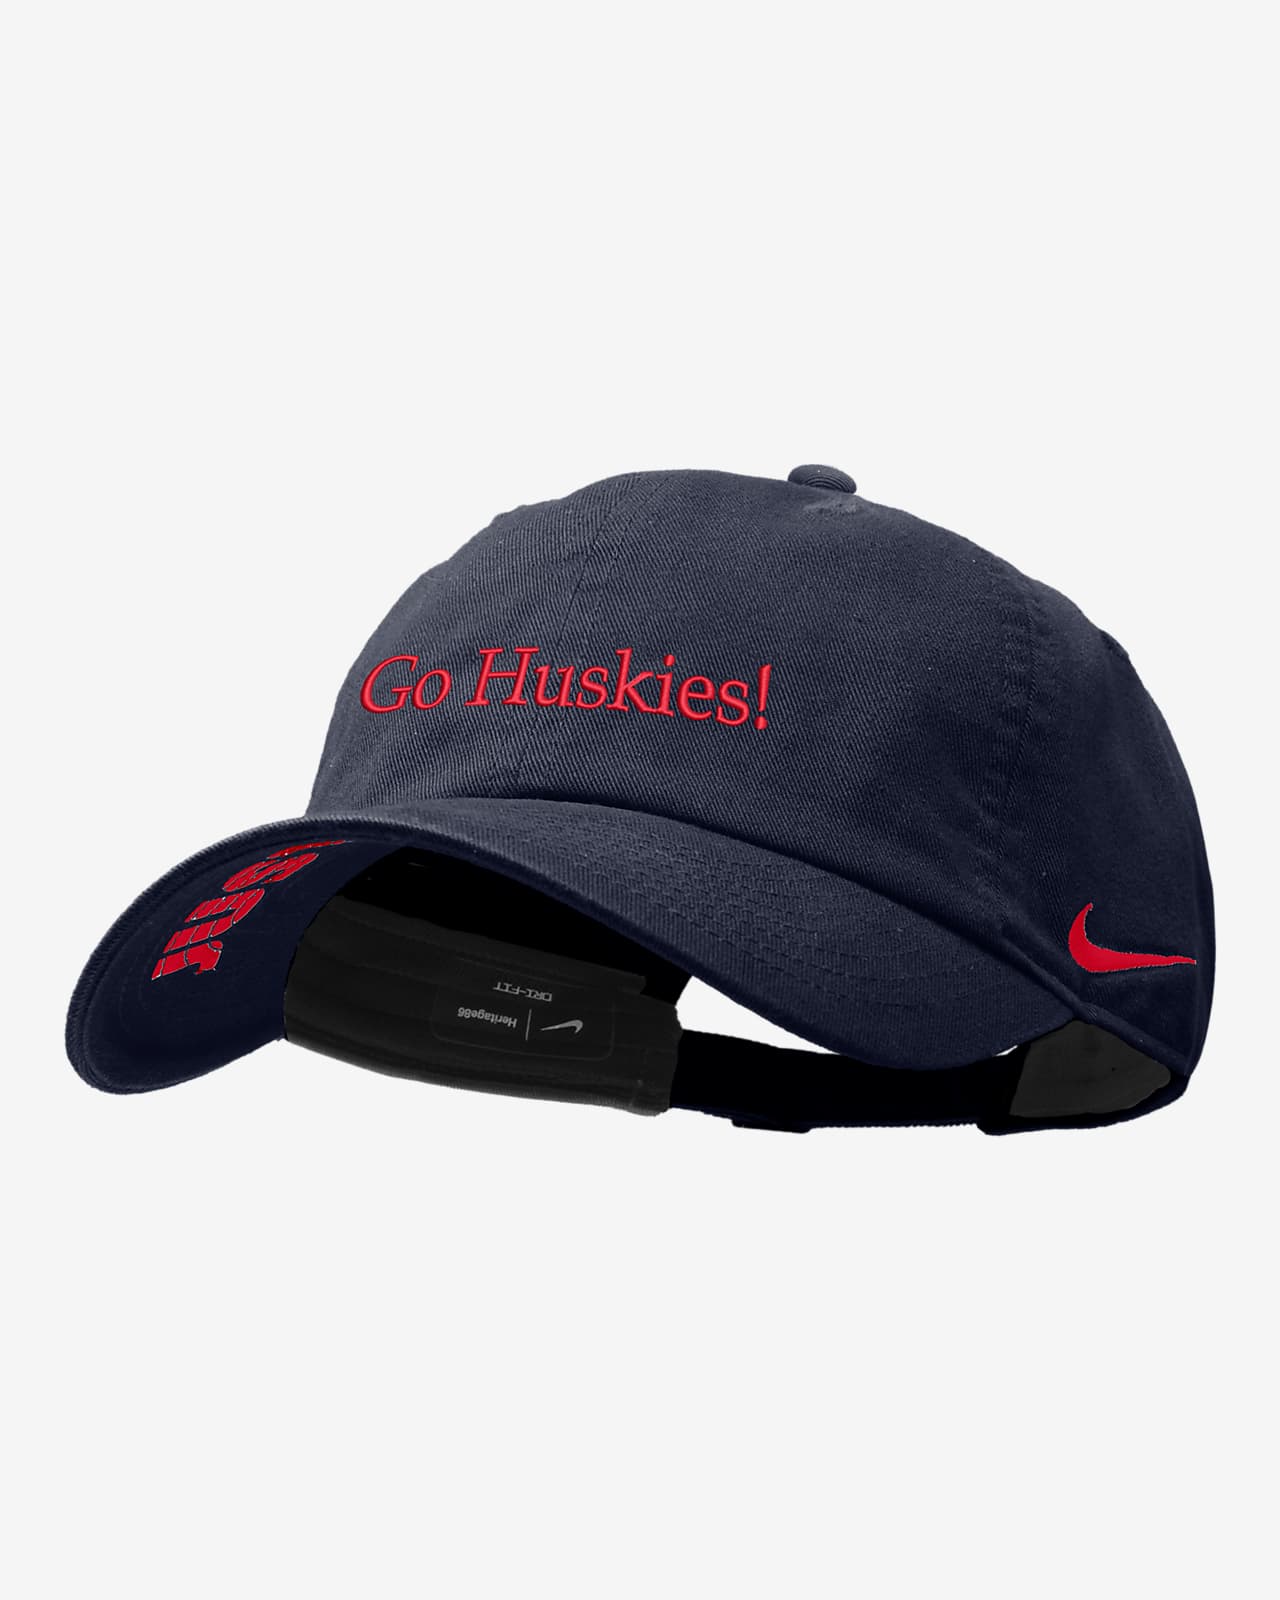 University of Connecticut Huskies Nike Boonie Hat navy